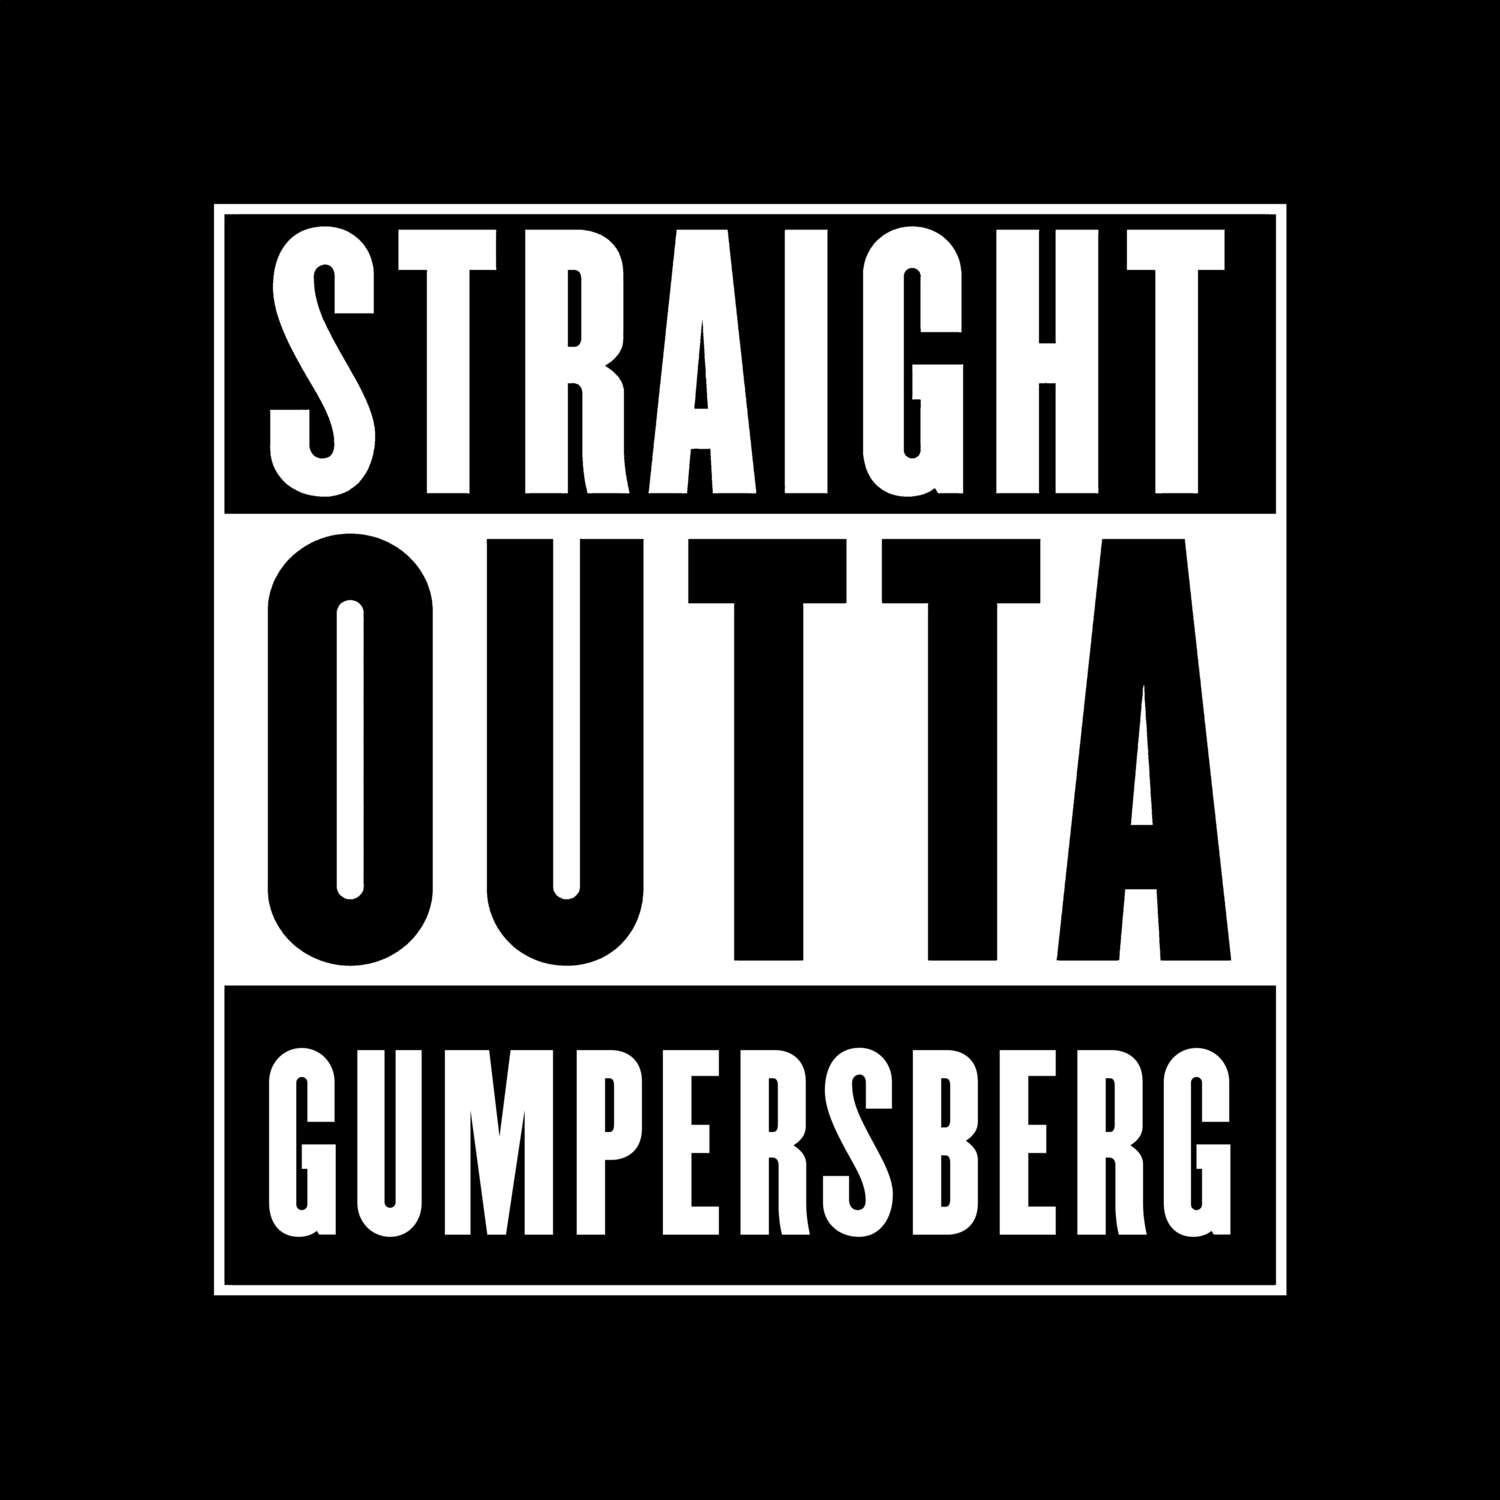 Gumpersberg T-Shirt »Straight Outta«